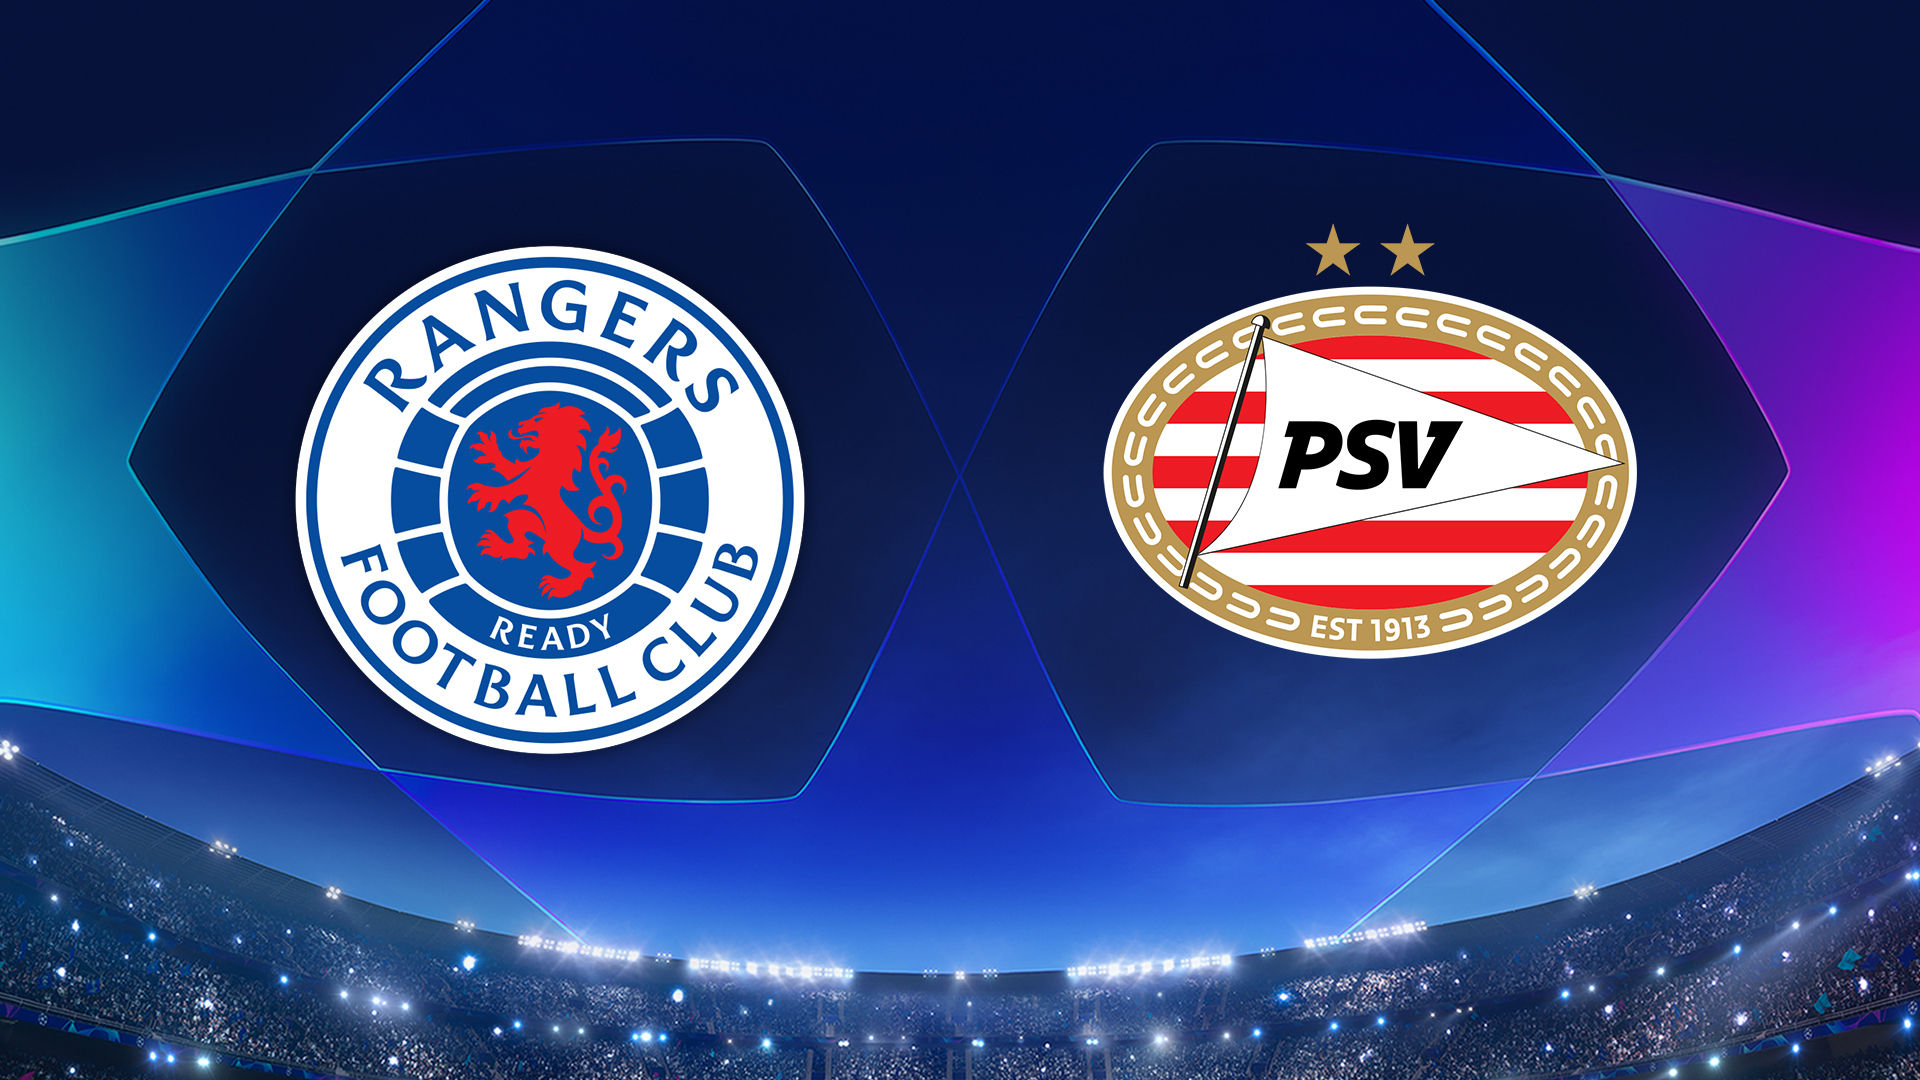 Watch UEFA Champions League: Rangers vs. PSV - Full show on Paramount Plus